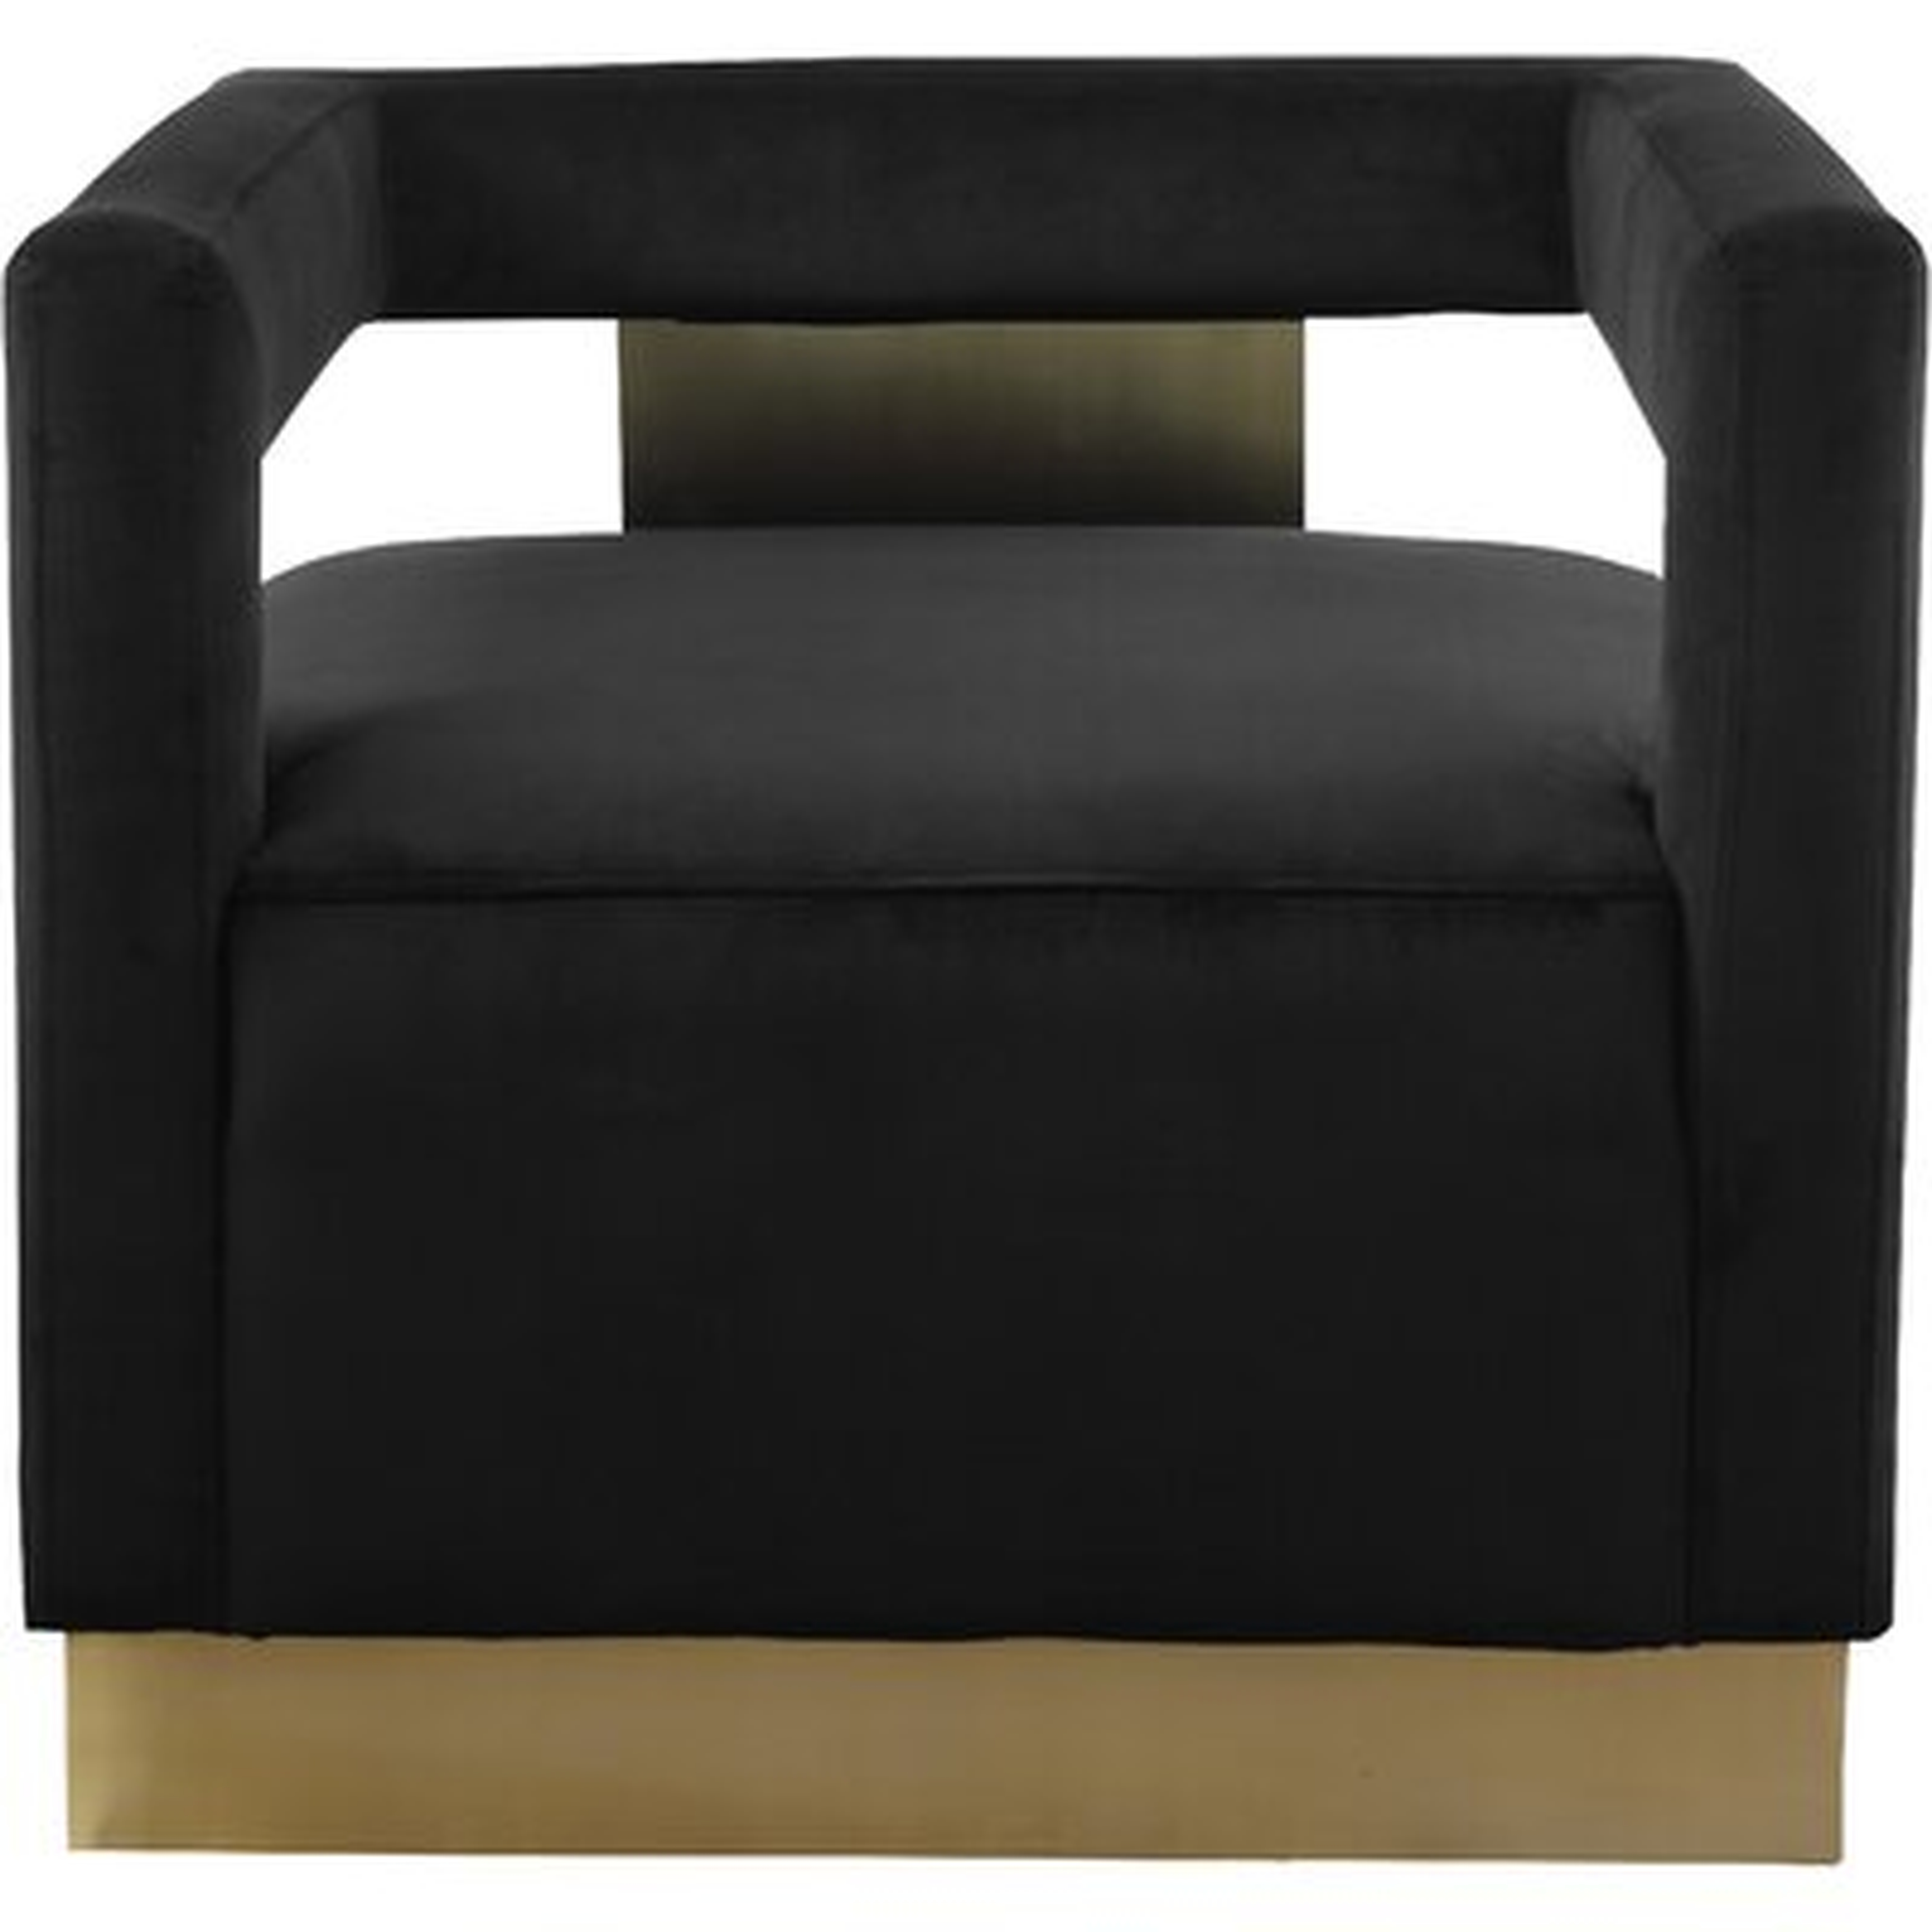 Tammie Black Velvet Barrel Chair - Wayfair